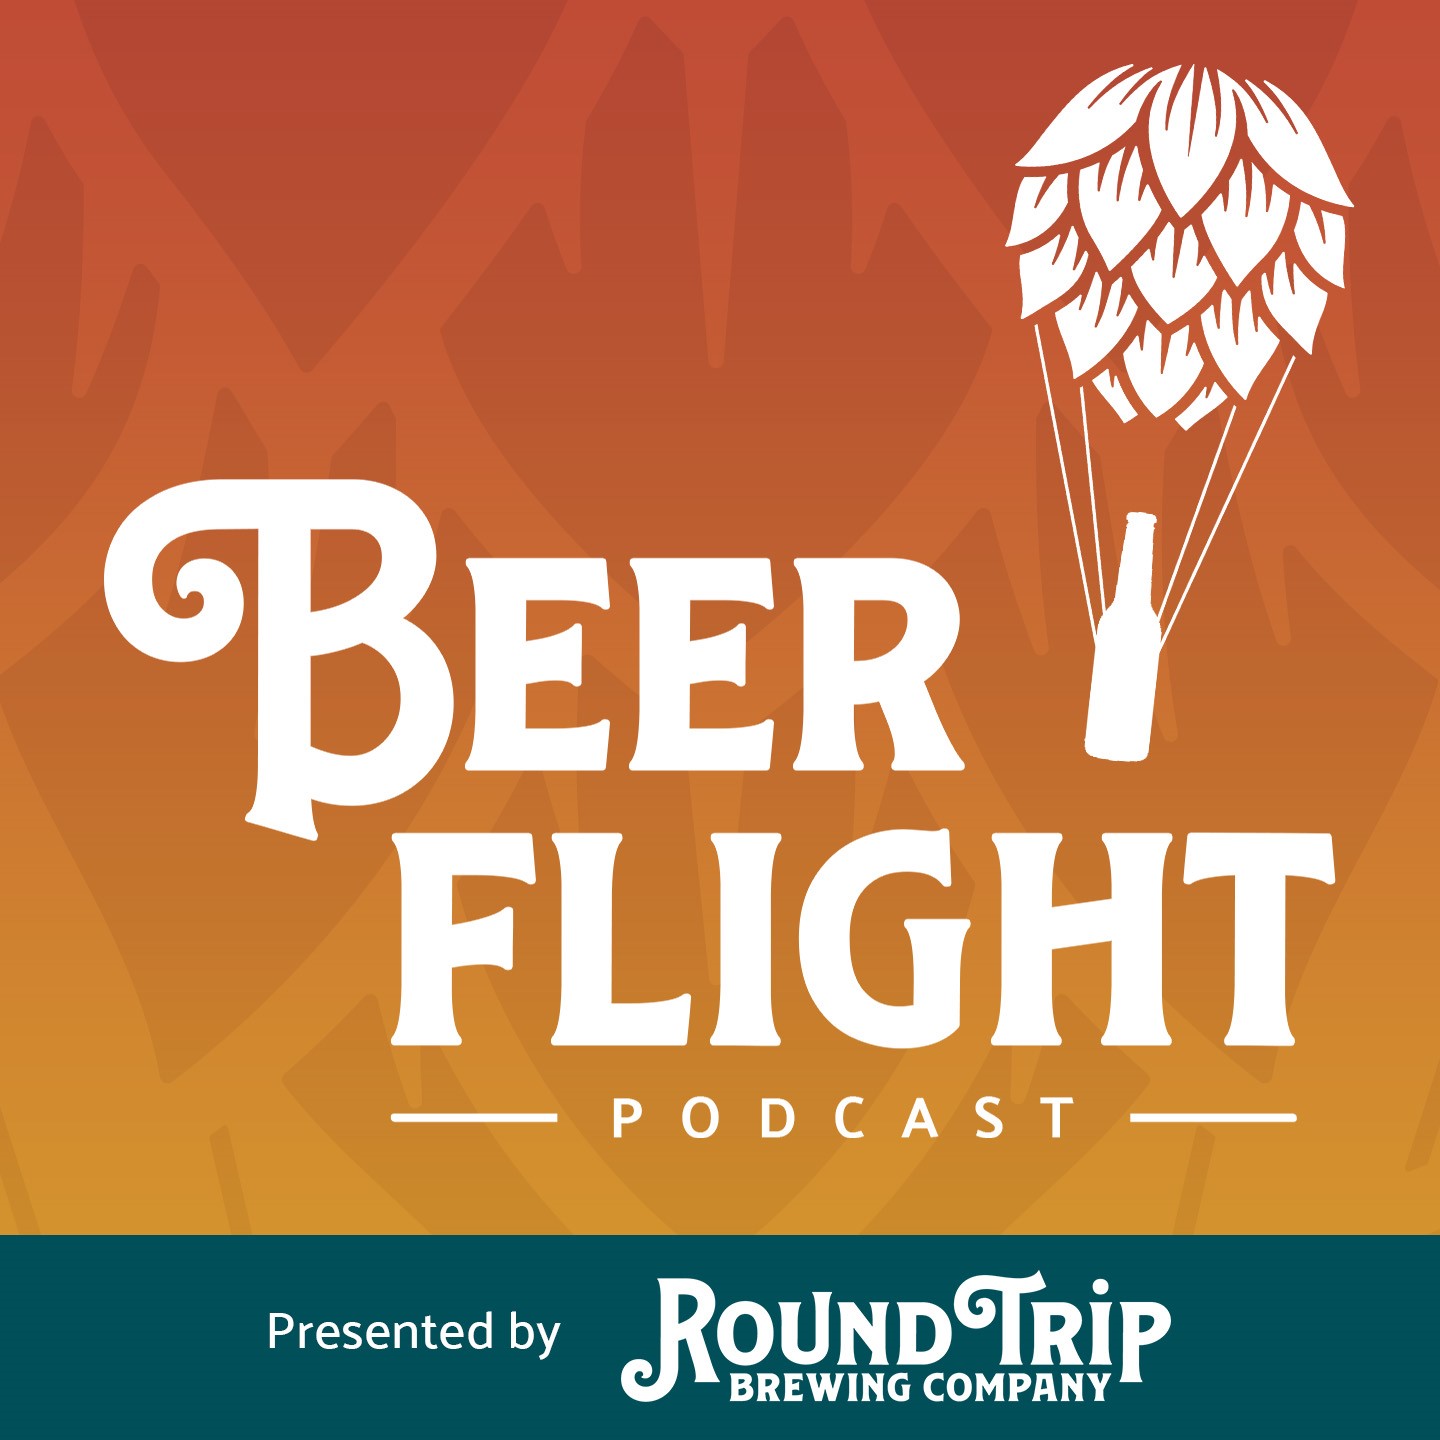 Trailer: Beer Flight Podcast Coming Soon